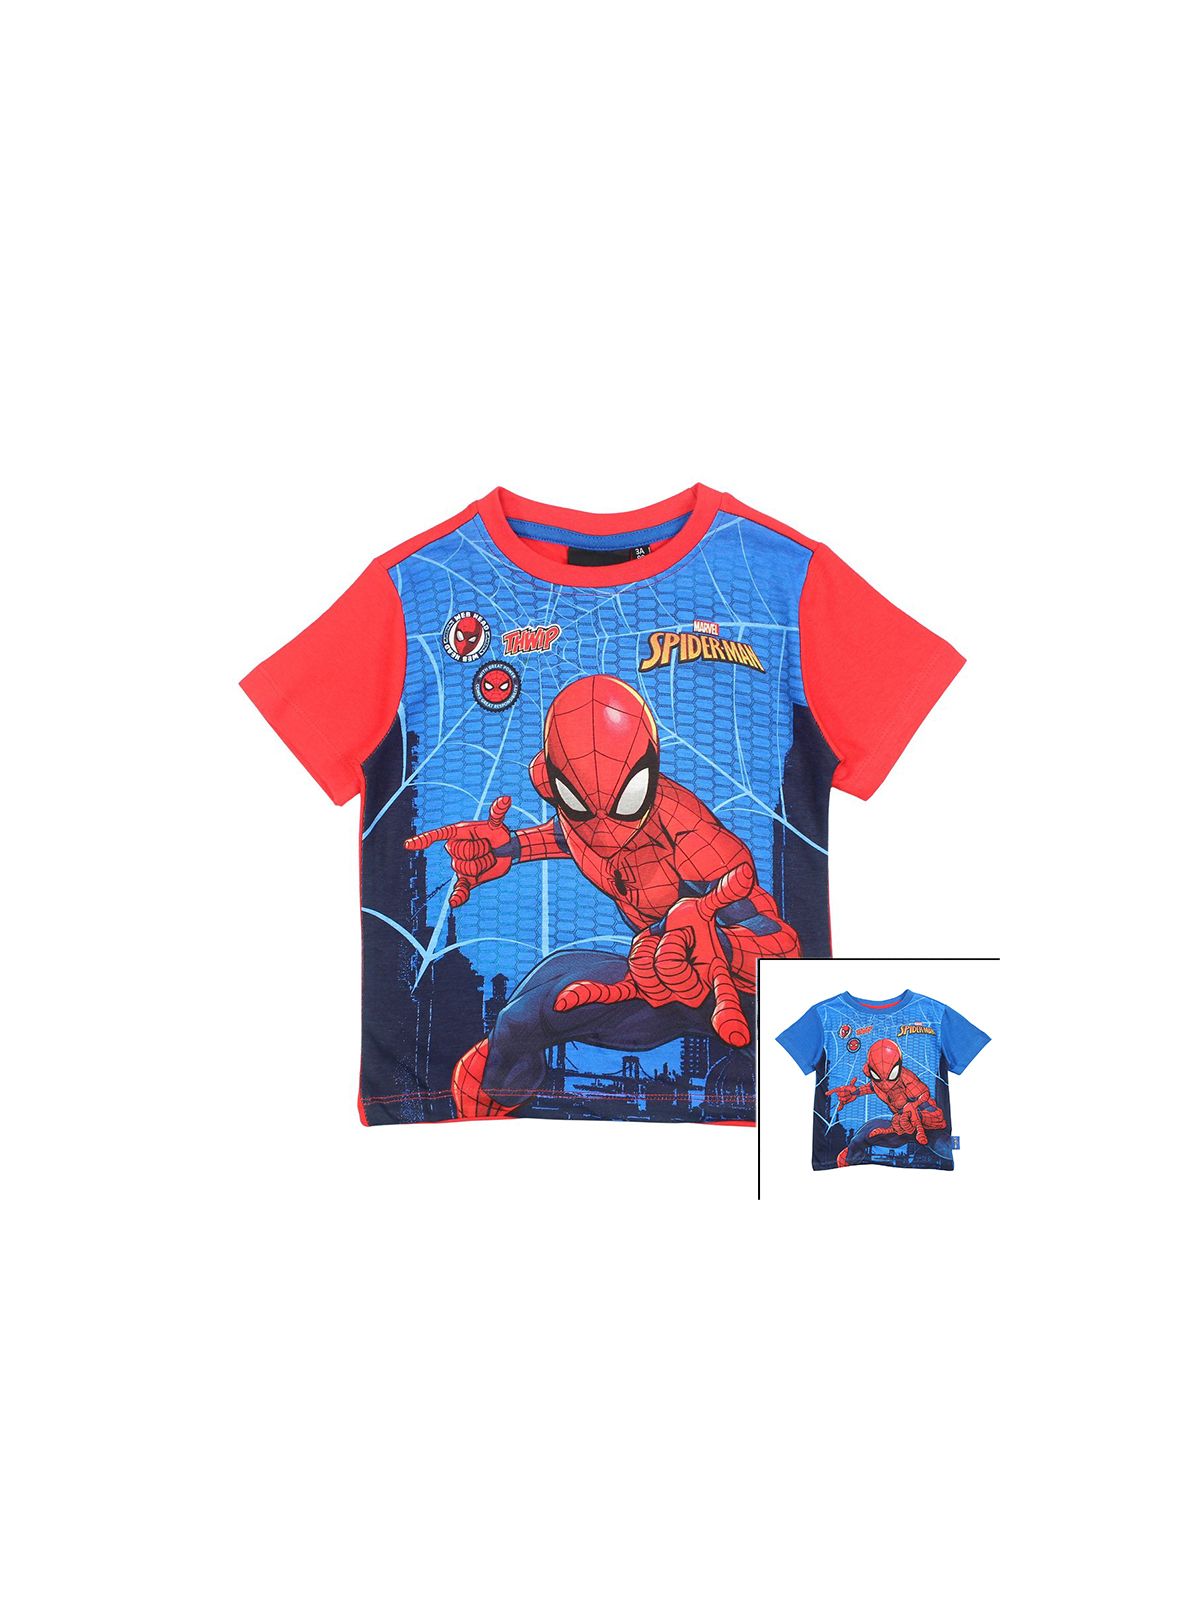 Spiderman t-shirt.